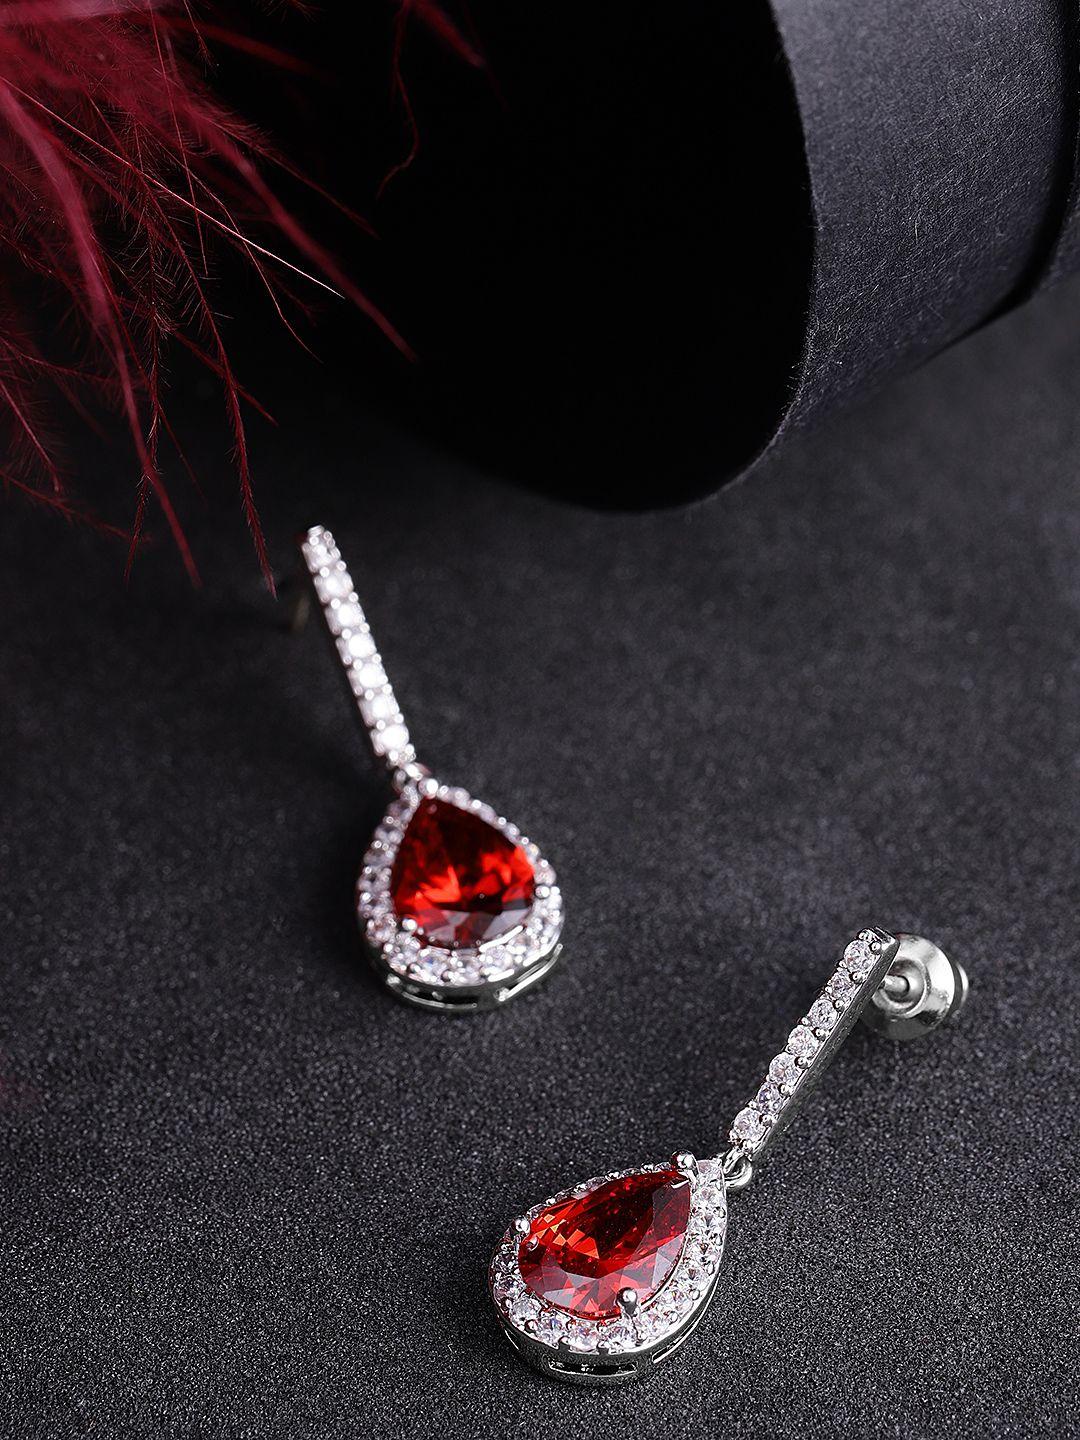 carlton london silver-toned & red rhodium-plated teardrop shaped cz studded drop earrings